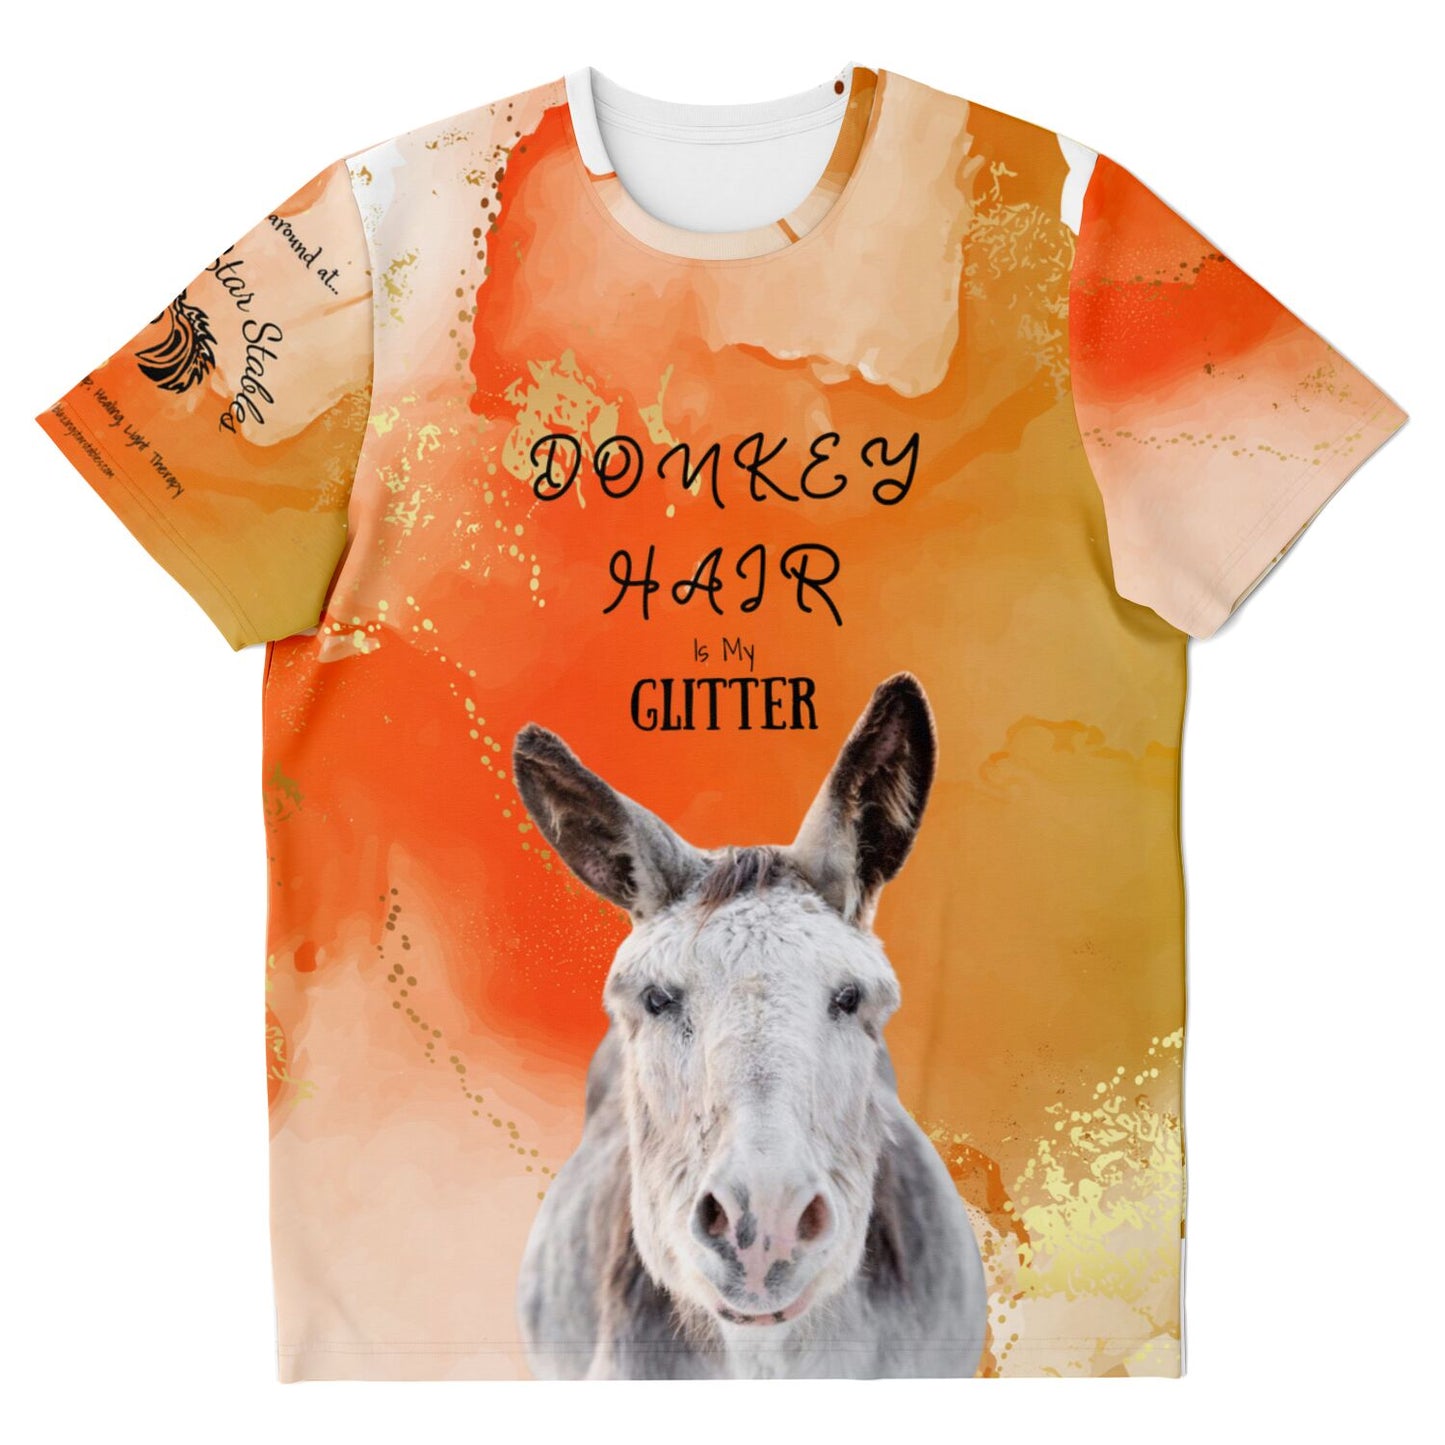 Donkey Glitter T shirt